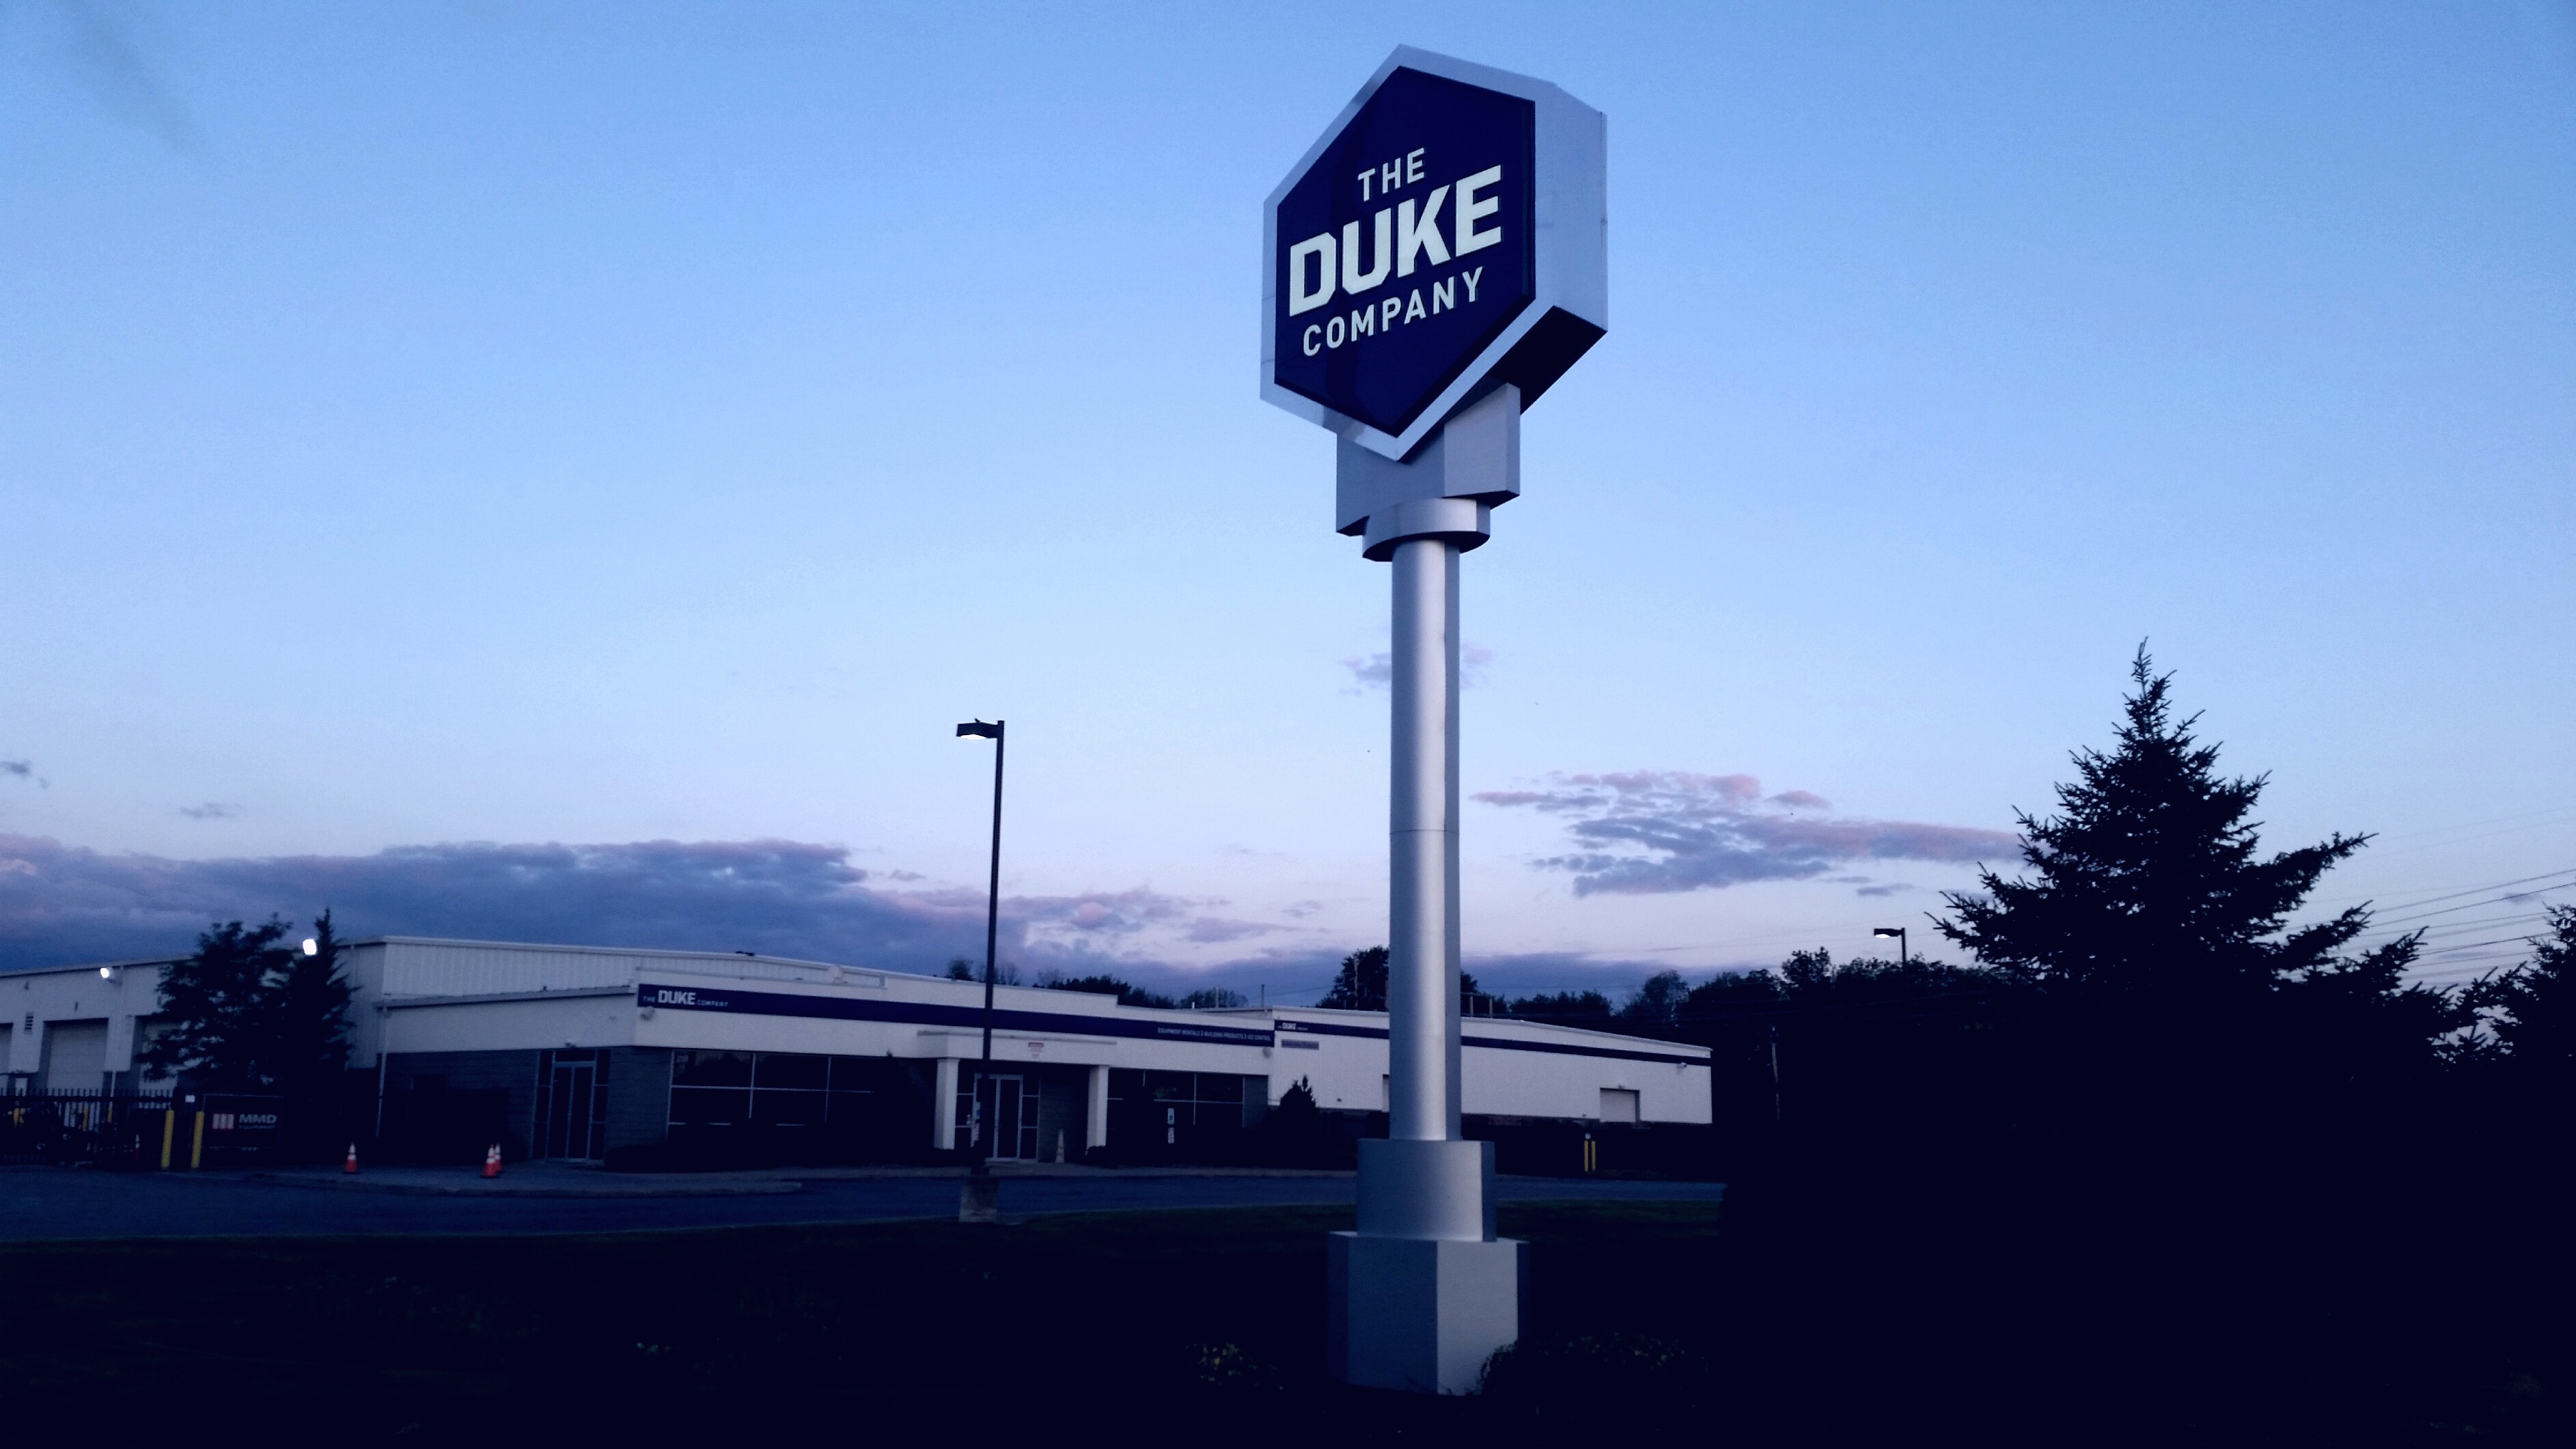 Duke Company in Rochester New York